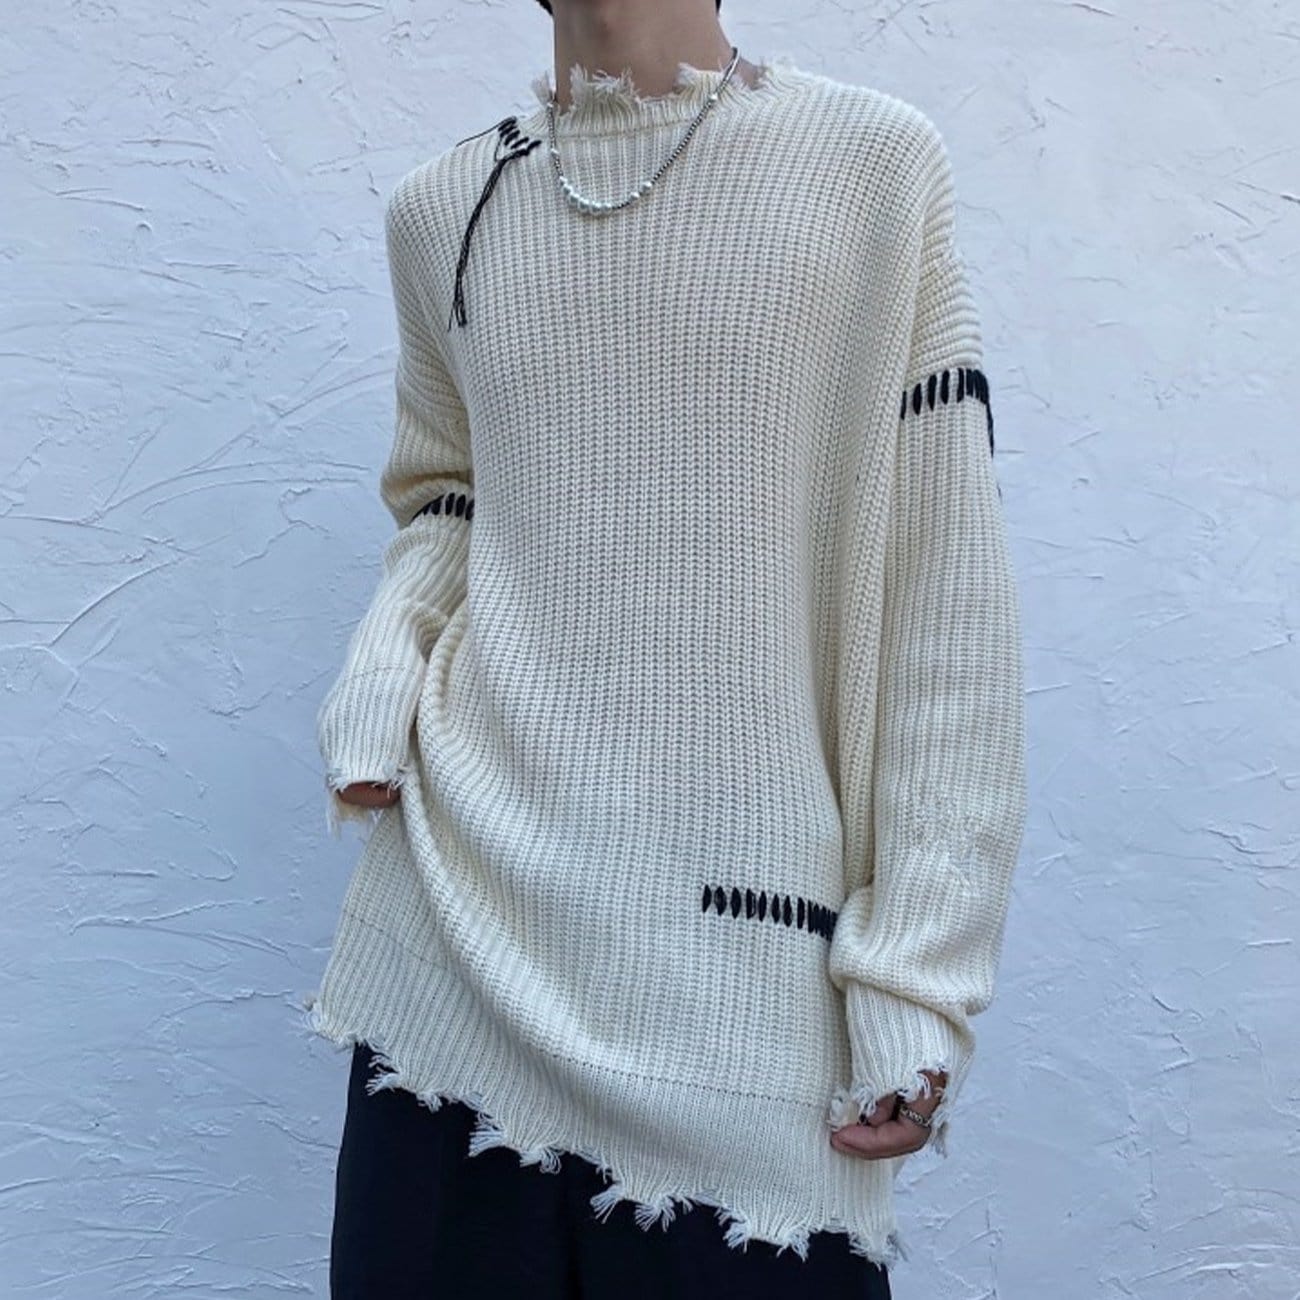 WLS Dark Knitted Sweater